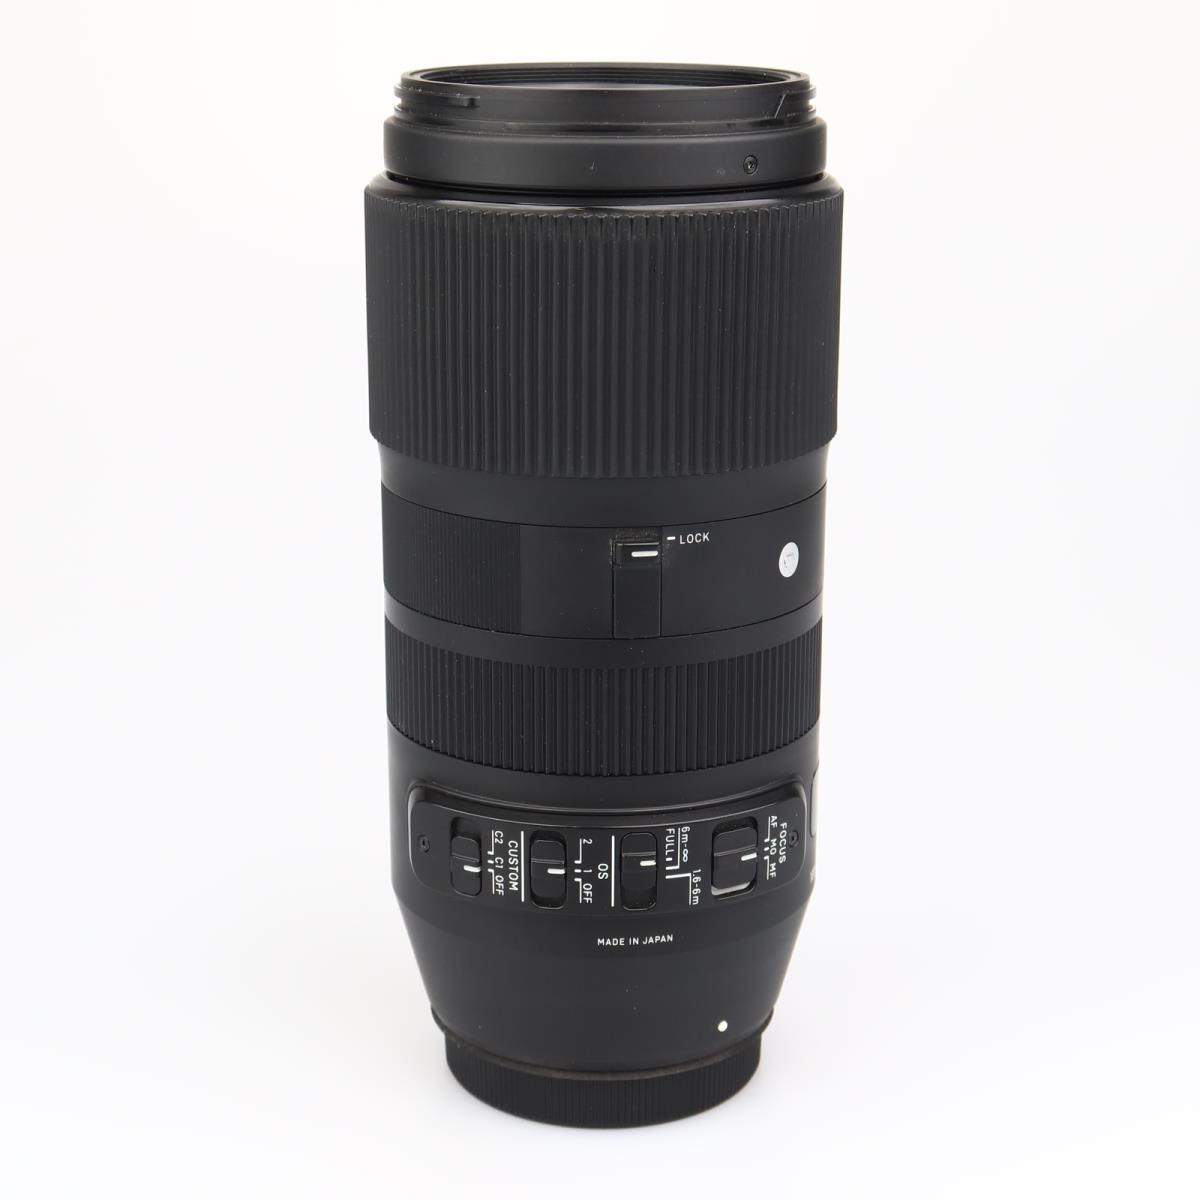 (Myyty) Sigma 100-400mm f/5-6.3 DG OS HSM Contemporary (Canon) (käytetty) (Takuu)